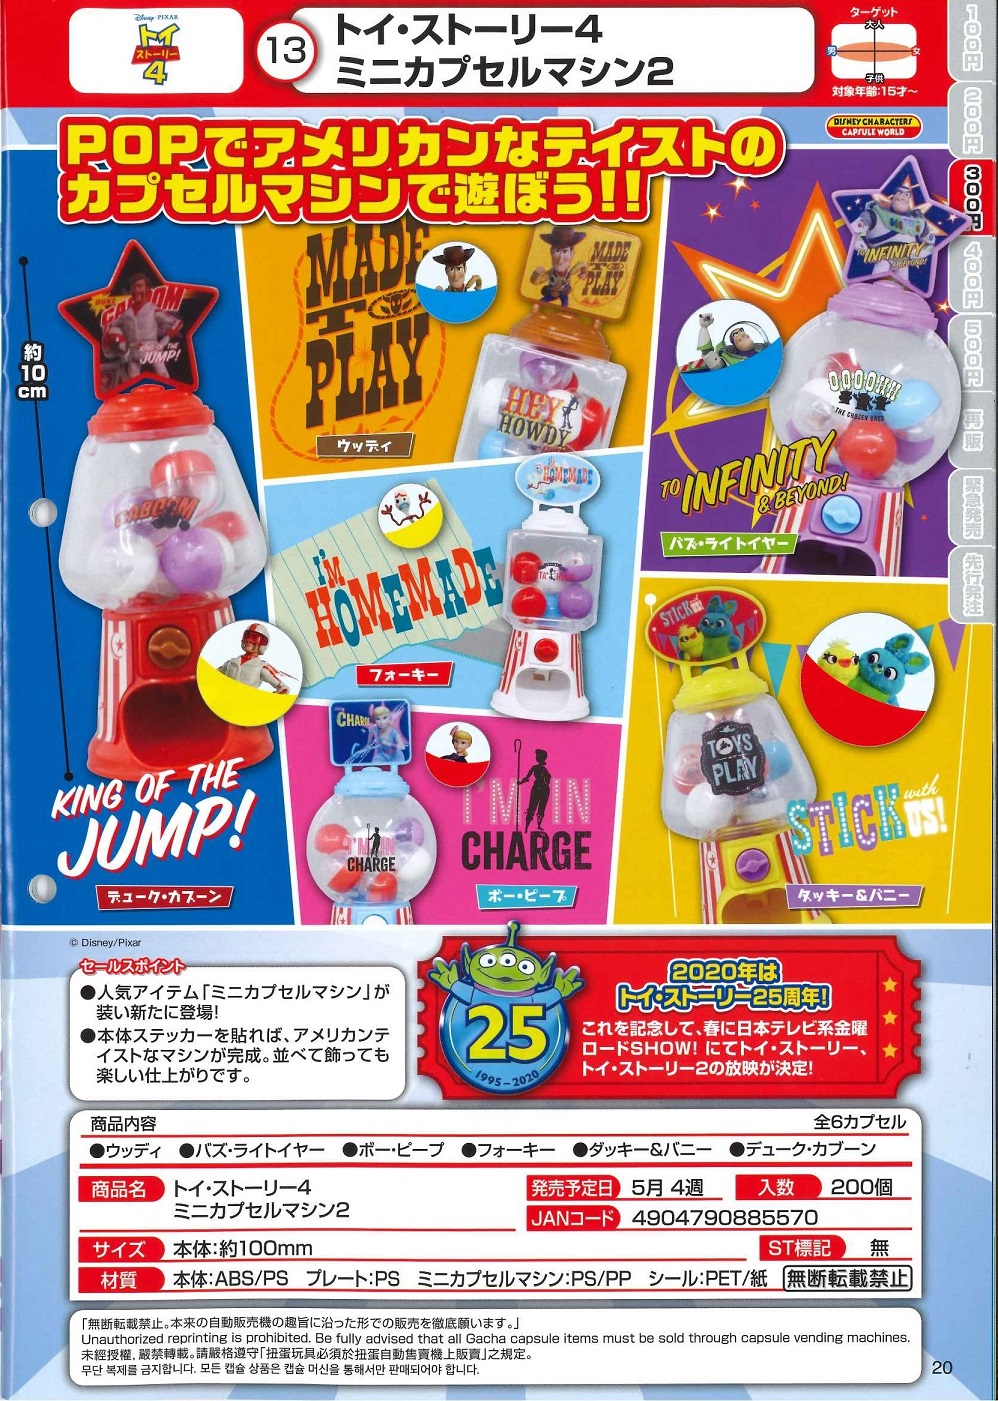 【B】300日元扭蛋 玩具总动员4 迷你扭蛋机 第2弹 全6种 (1袋40个)  885570